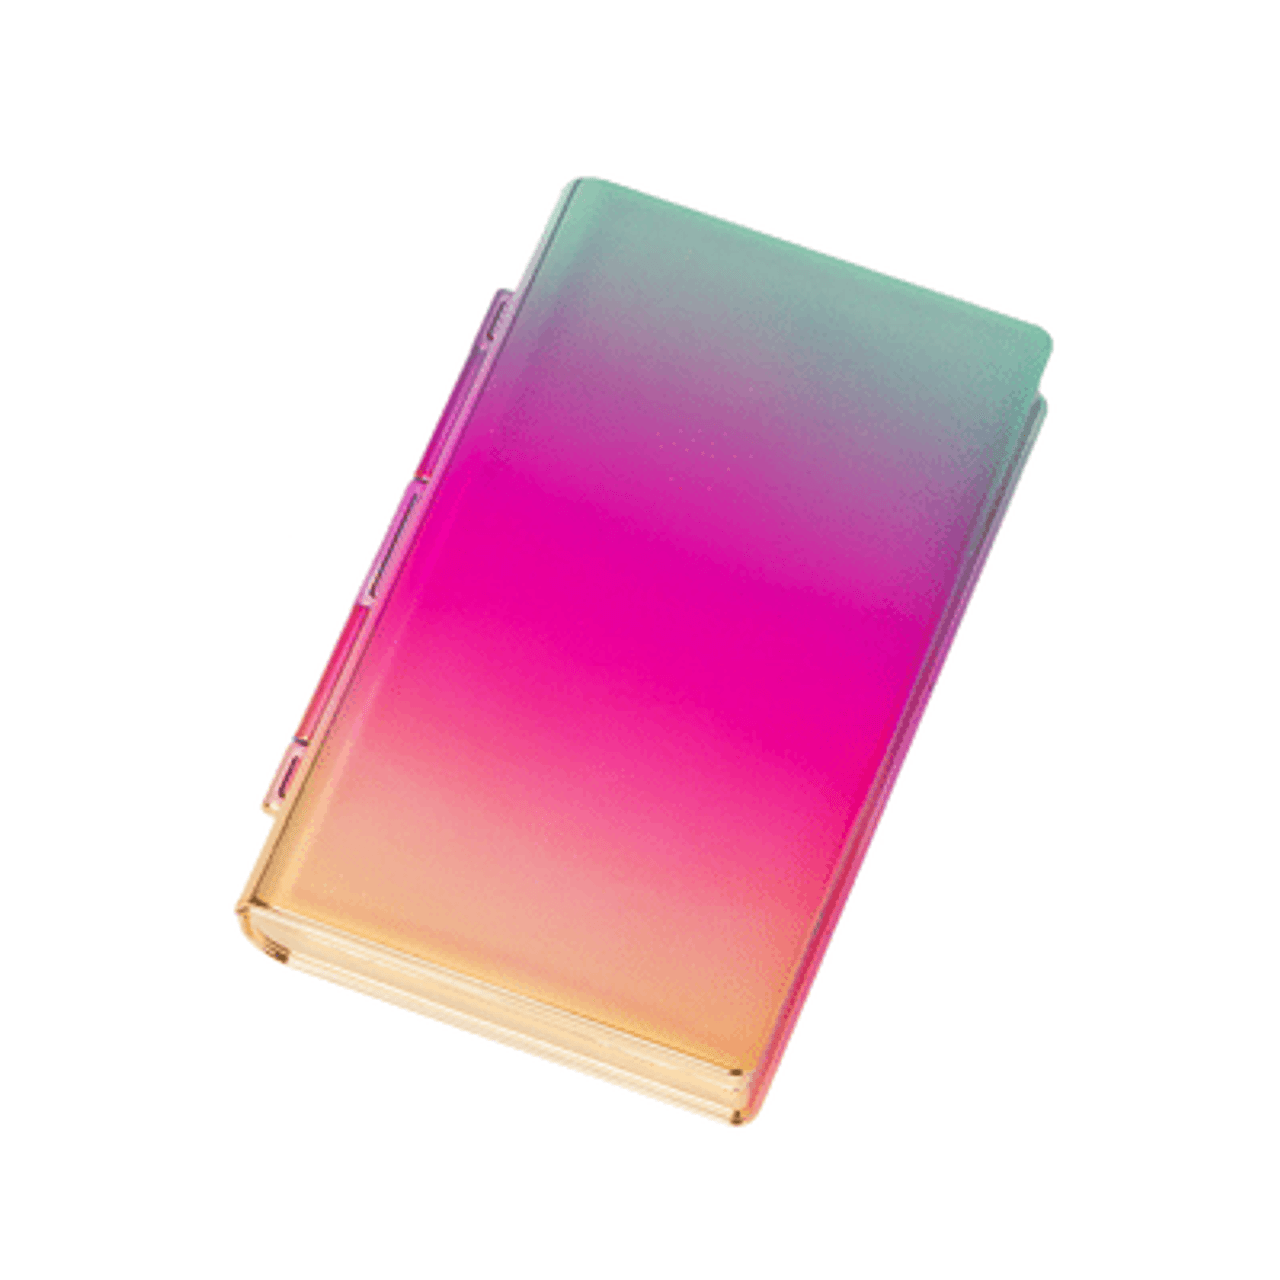 Truweigh Shine Scale - 100g x 0.01g Rainbow